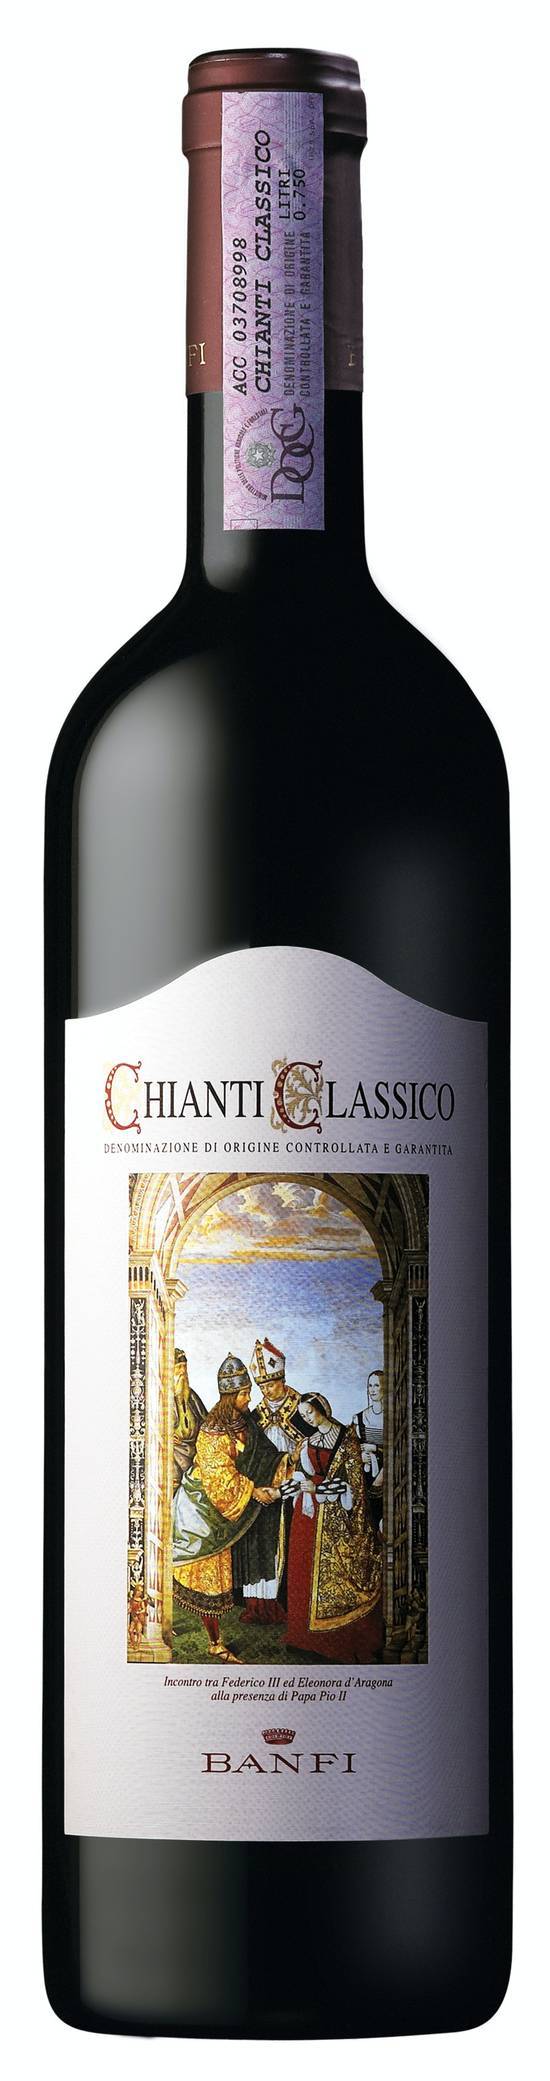 Banfi Chianti Classico (750ml bottle)